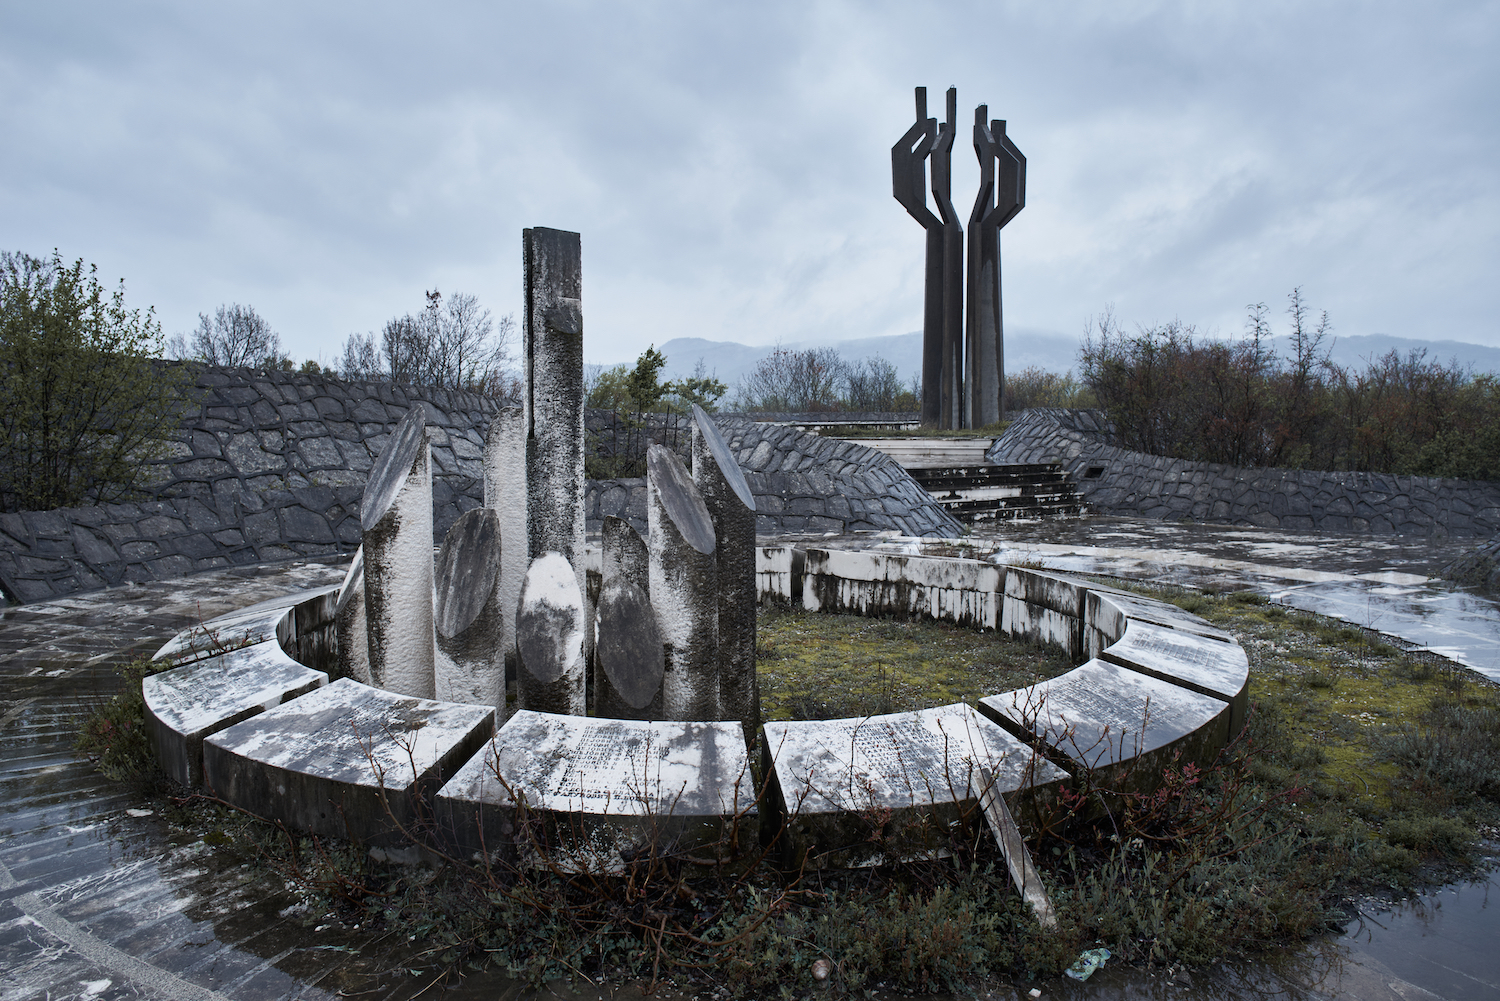 Monument to Fallen Fighters in Barutana. Image: Luka Bosković